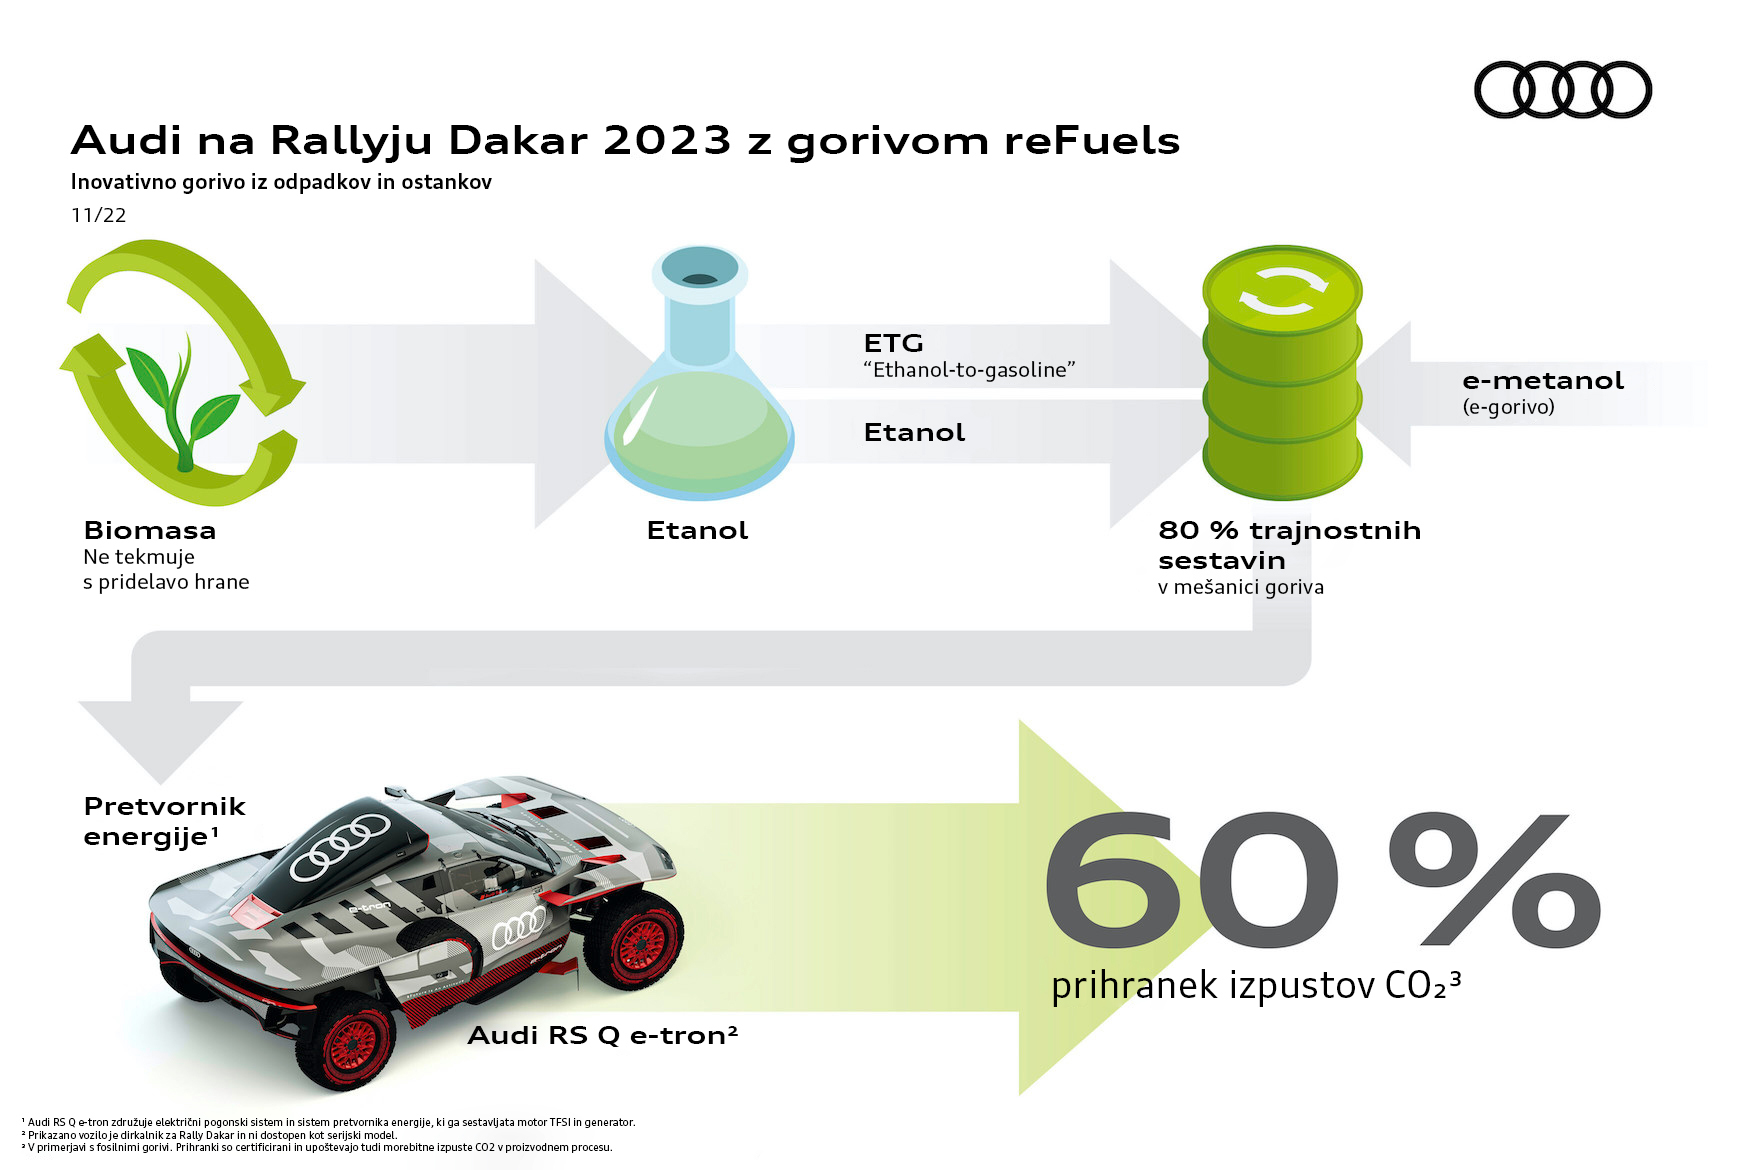 Audi z inovativnim gorivom reFuels na Rallyju Dakar 2023.